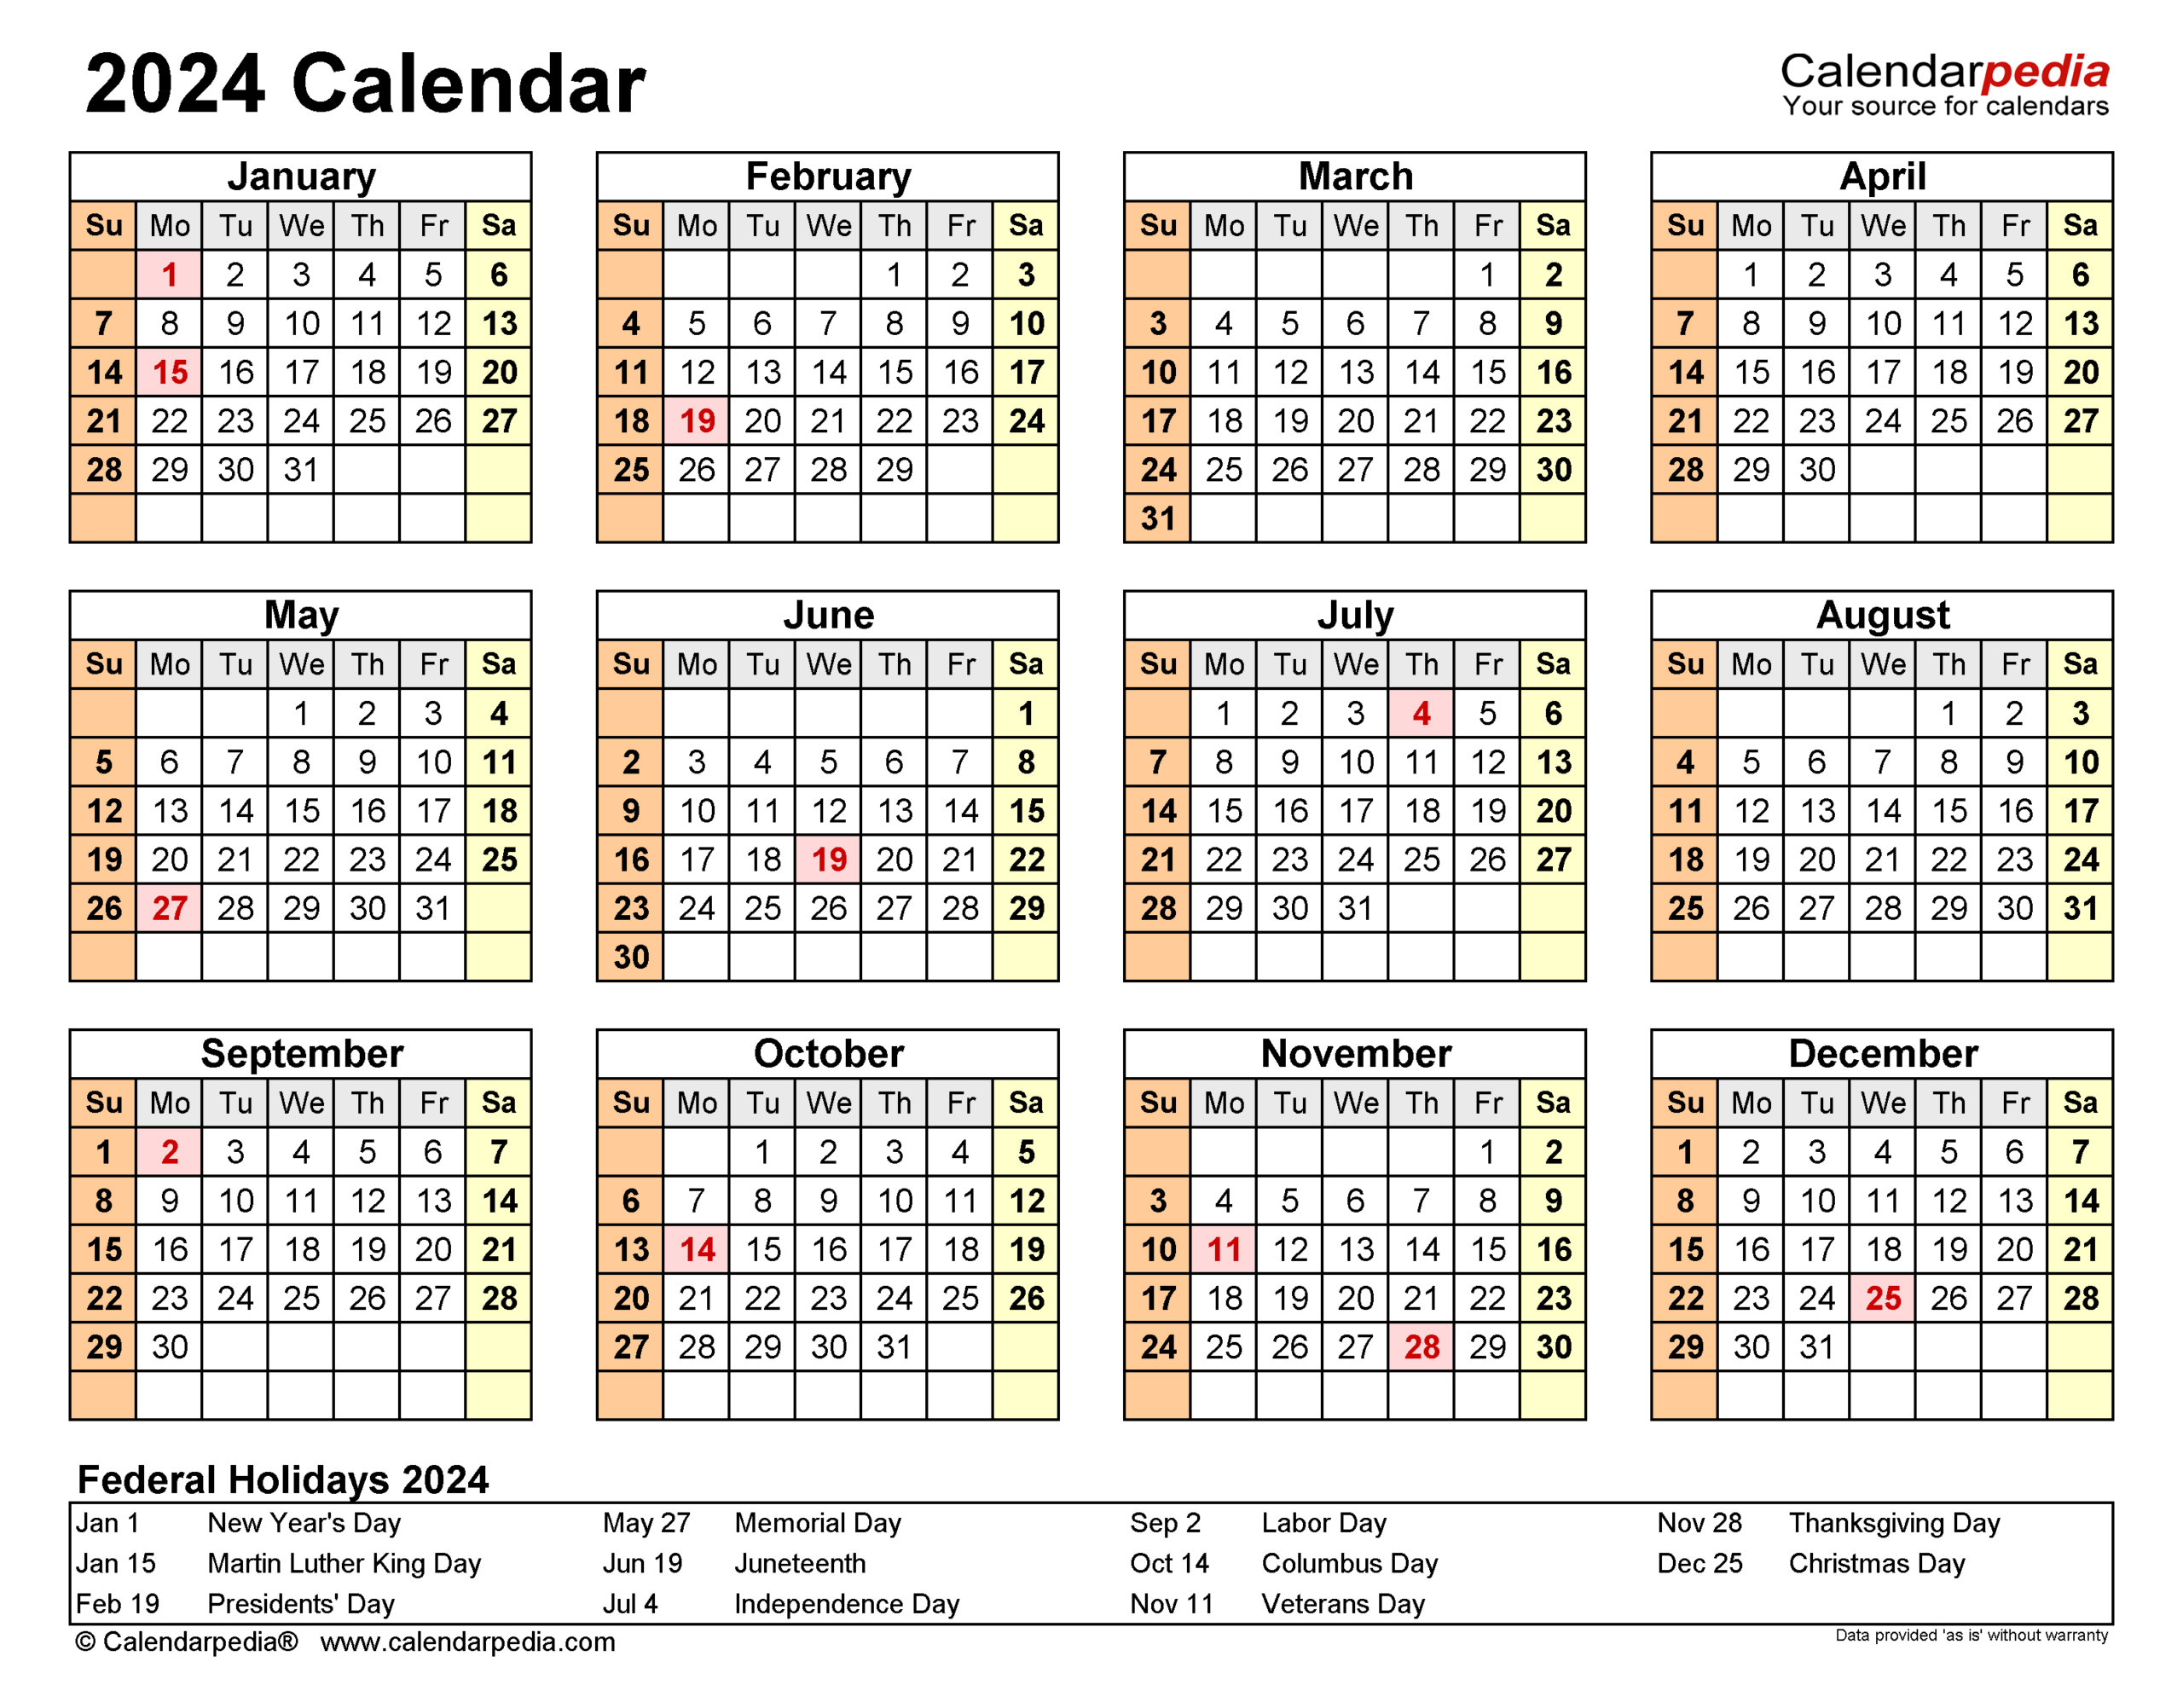 2024 Calendar - Free Printable Word Templates - Calendarpedia with regard to Free Printable Calendar 2024 Microsoft Word